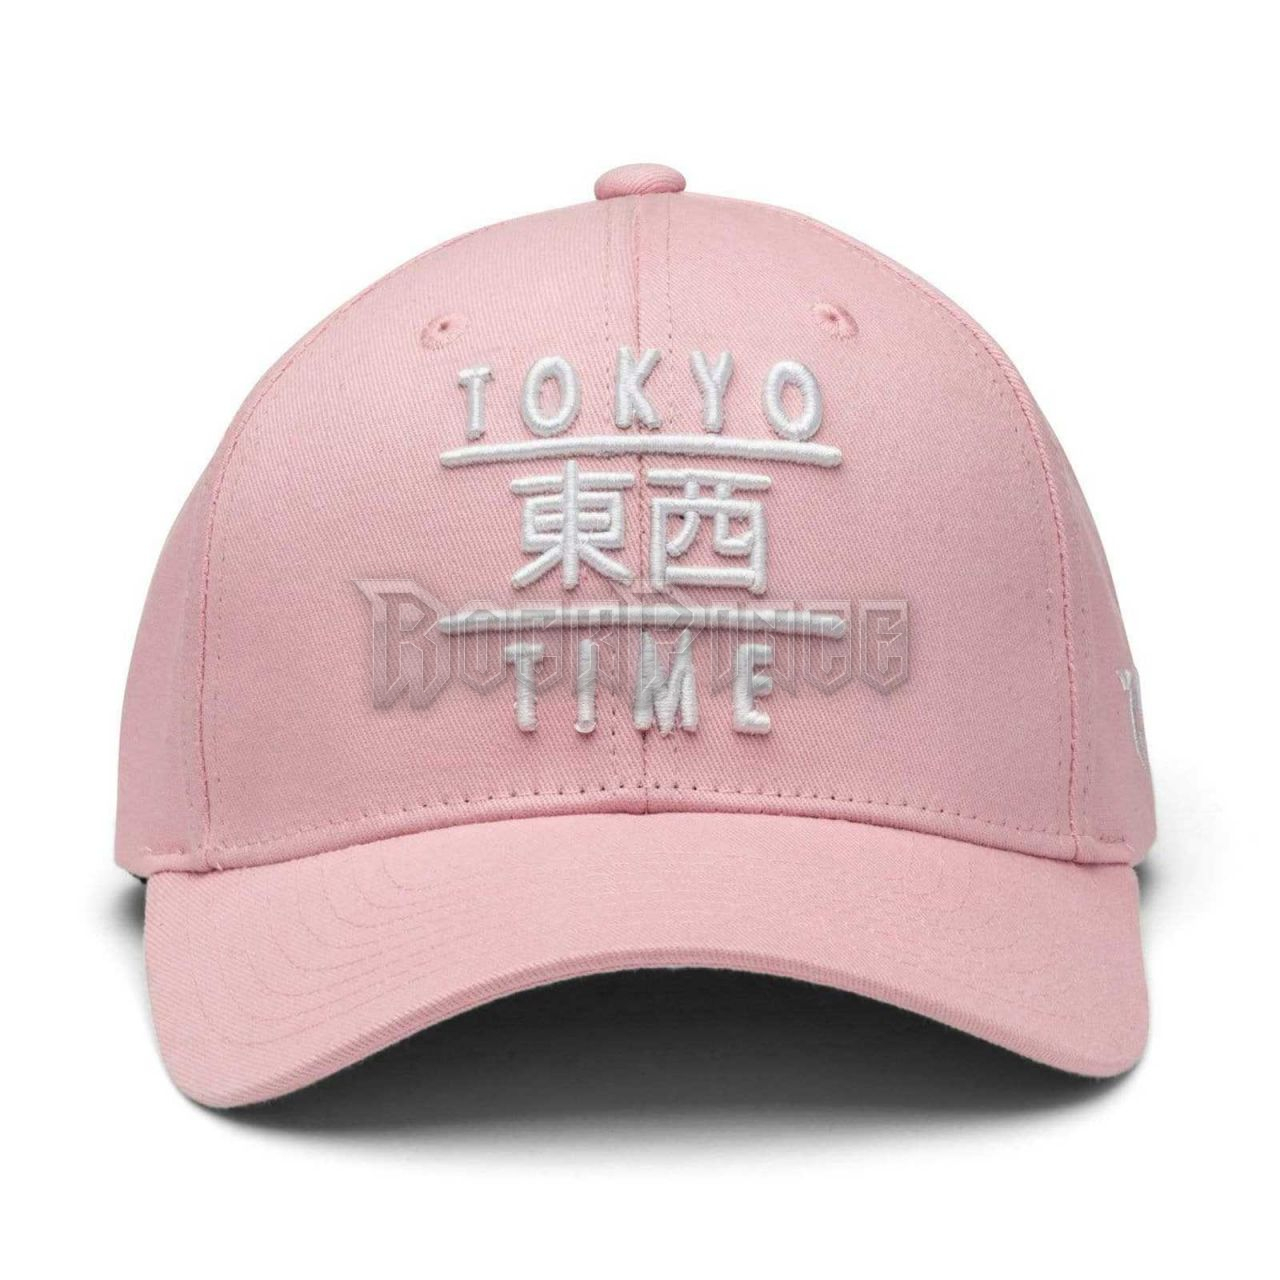 Tokyo Time - TT Heritage White Logo - snapback sapka - TOKYOSBCAP58P